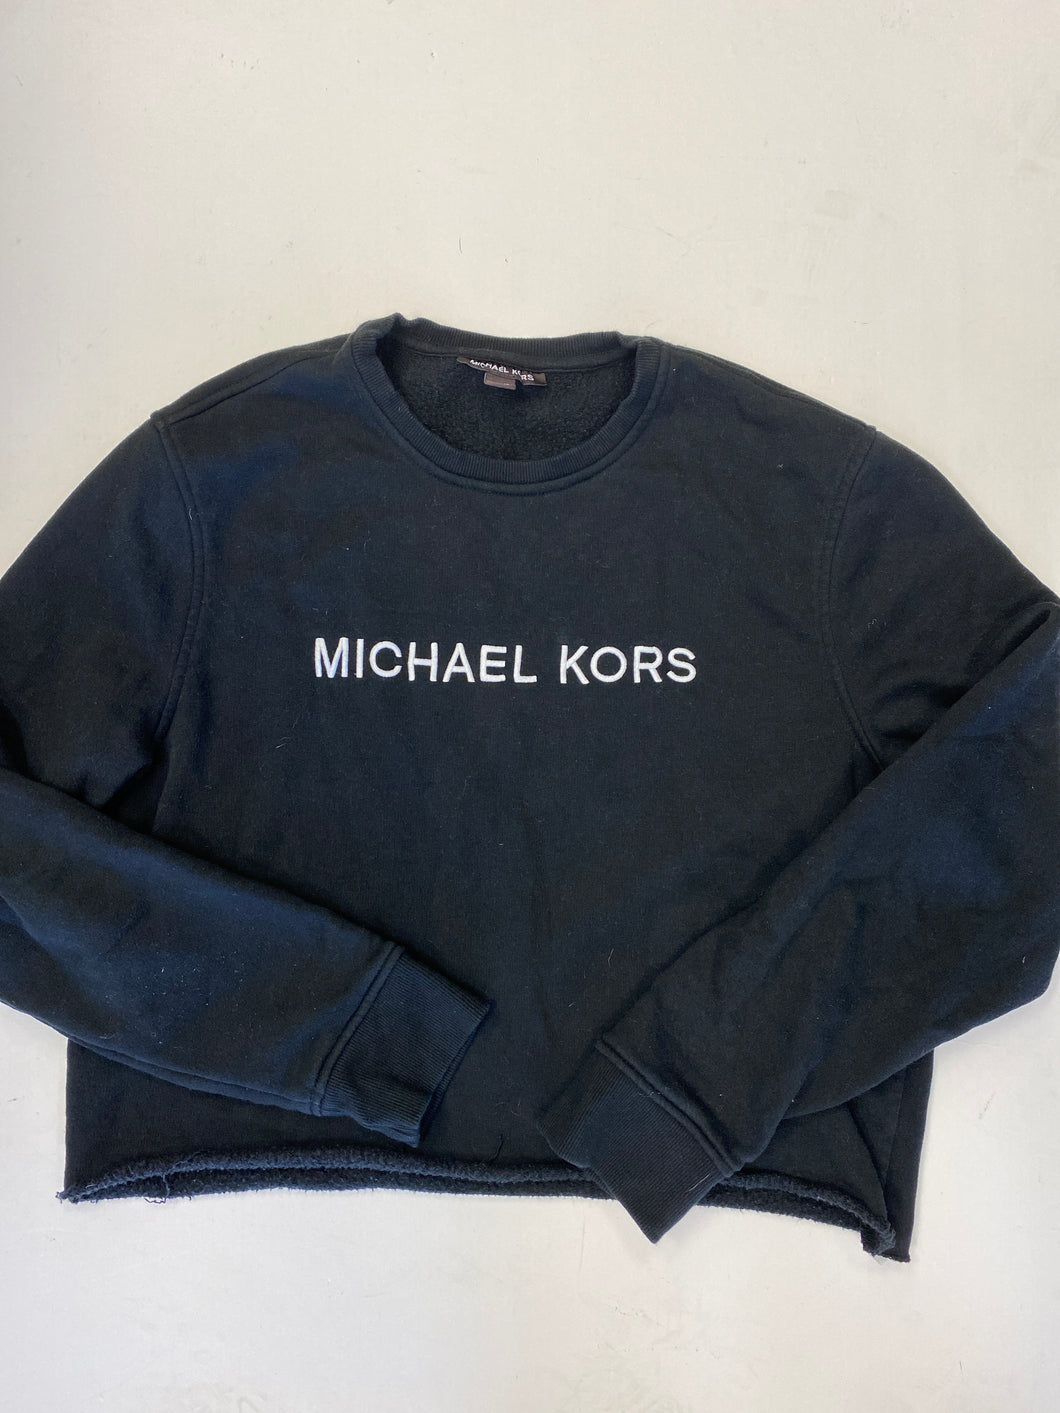 Michael Kors Sweatshirt Size Extra Large